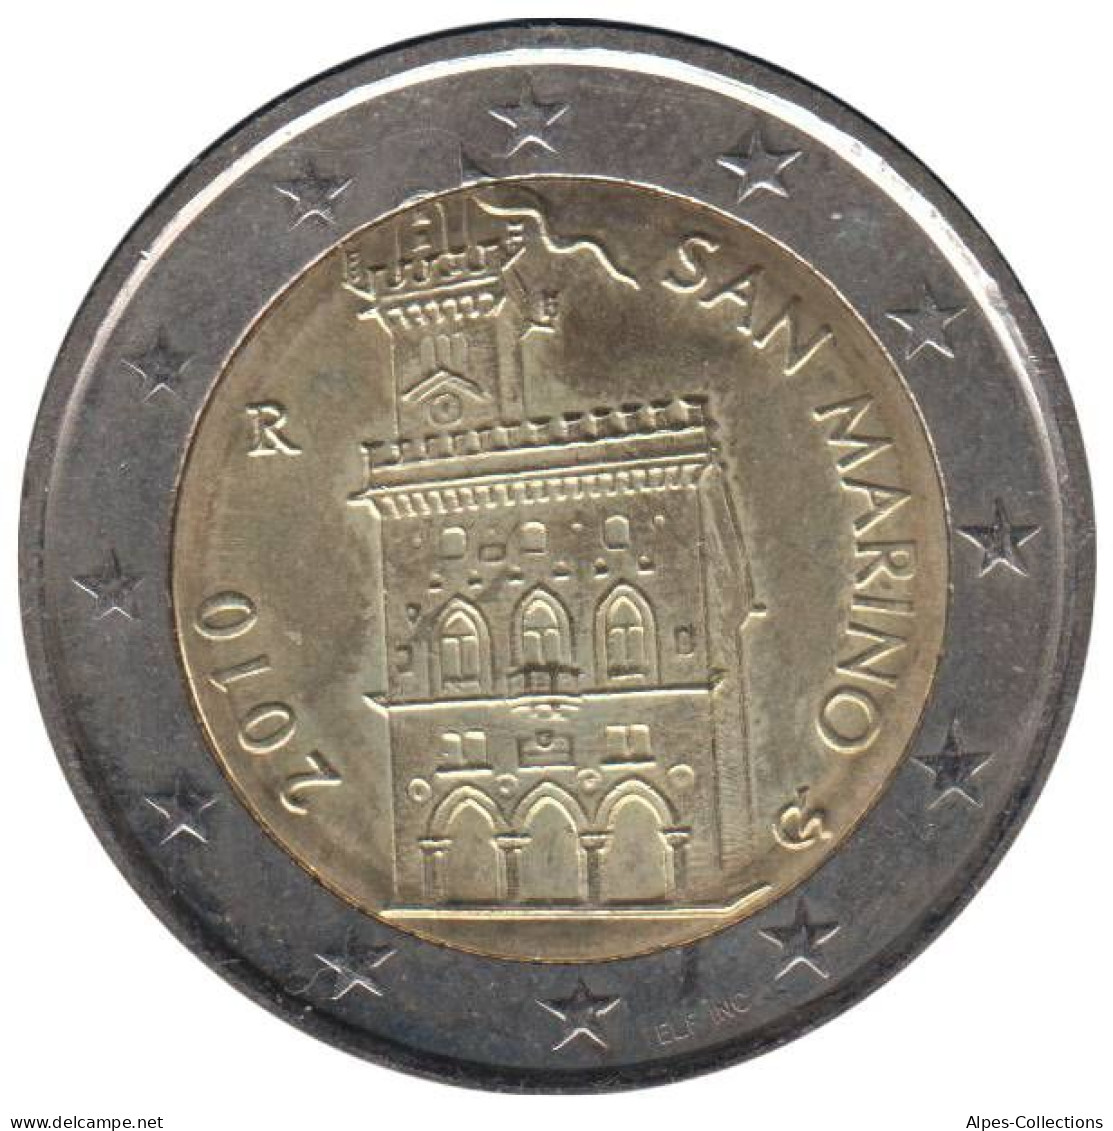 SA20010.2 - SAINT MARIN - 2 Euros - 2010 - San Marino